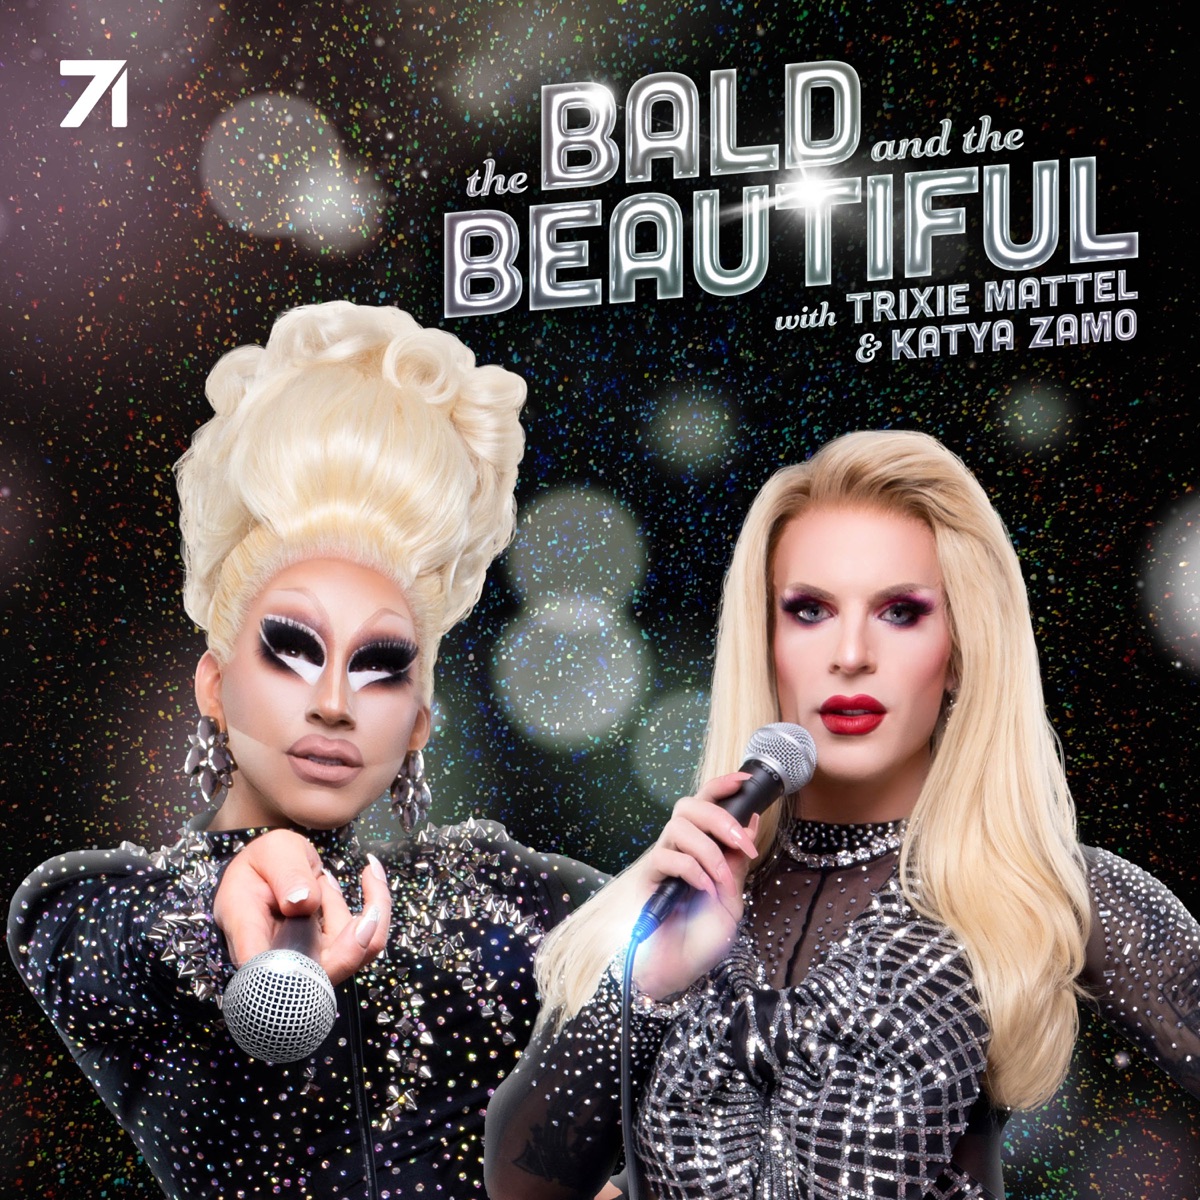 Prova X - The Bald and the Beautiful with Trixie Mattel and Katya Zamo â€“ Lyssna hÃ¤r â€“  Podtail